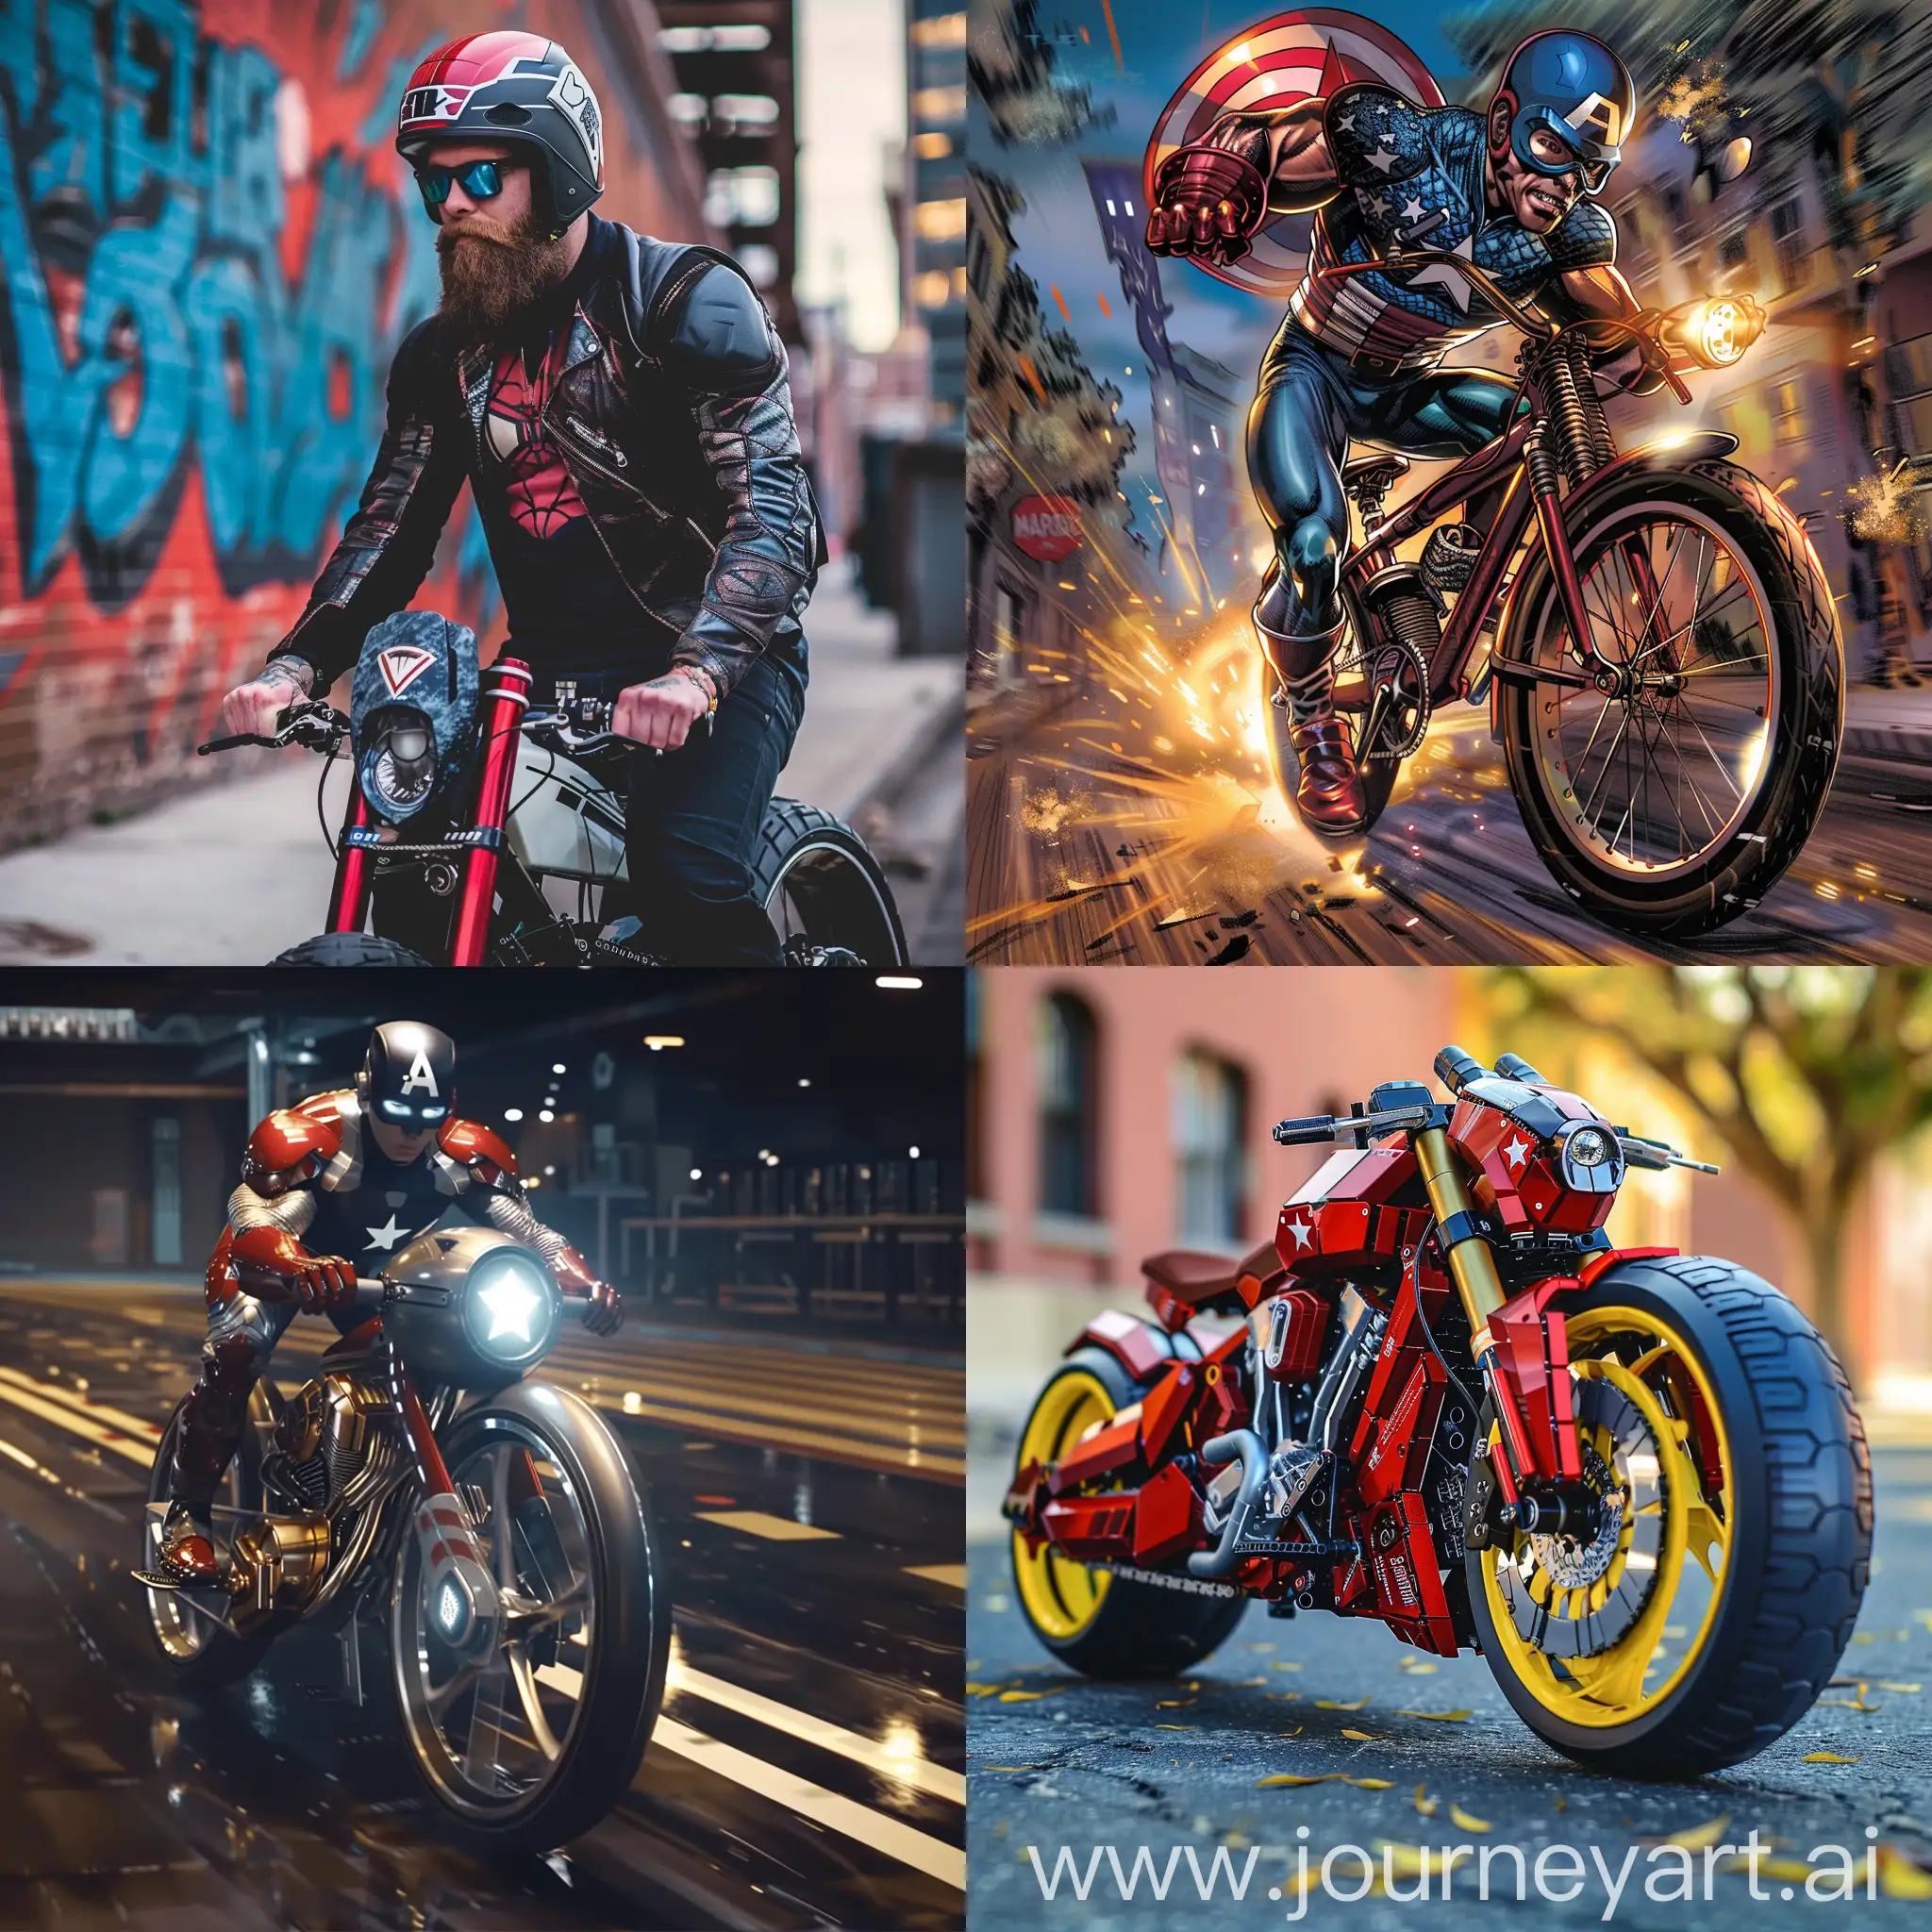 Marvel-Superhero-Riding-Motorcycle-at-Sunset